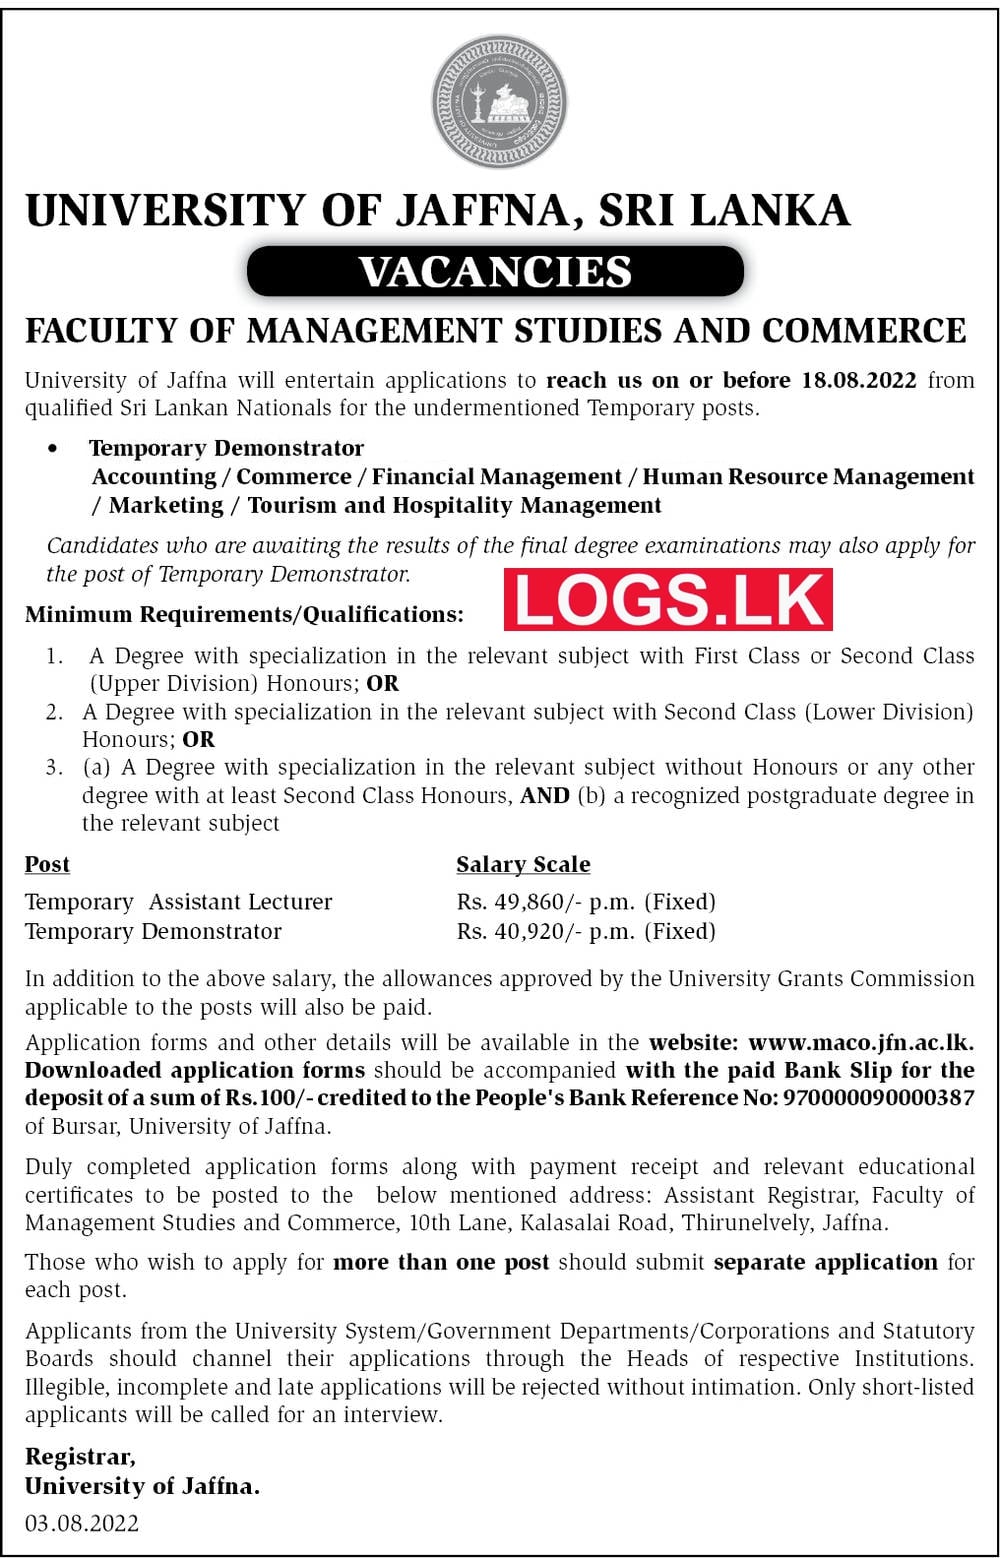 Temporary Demonstrator Vacancies 2022 - University of Jaffna (UOJ) Job Vacancy